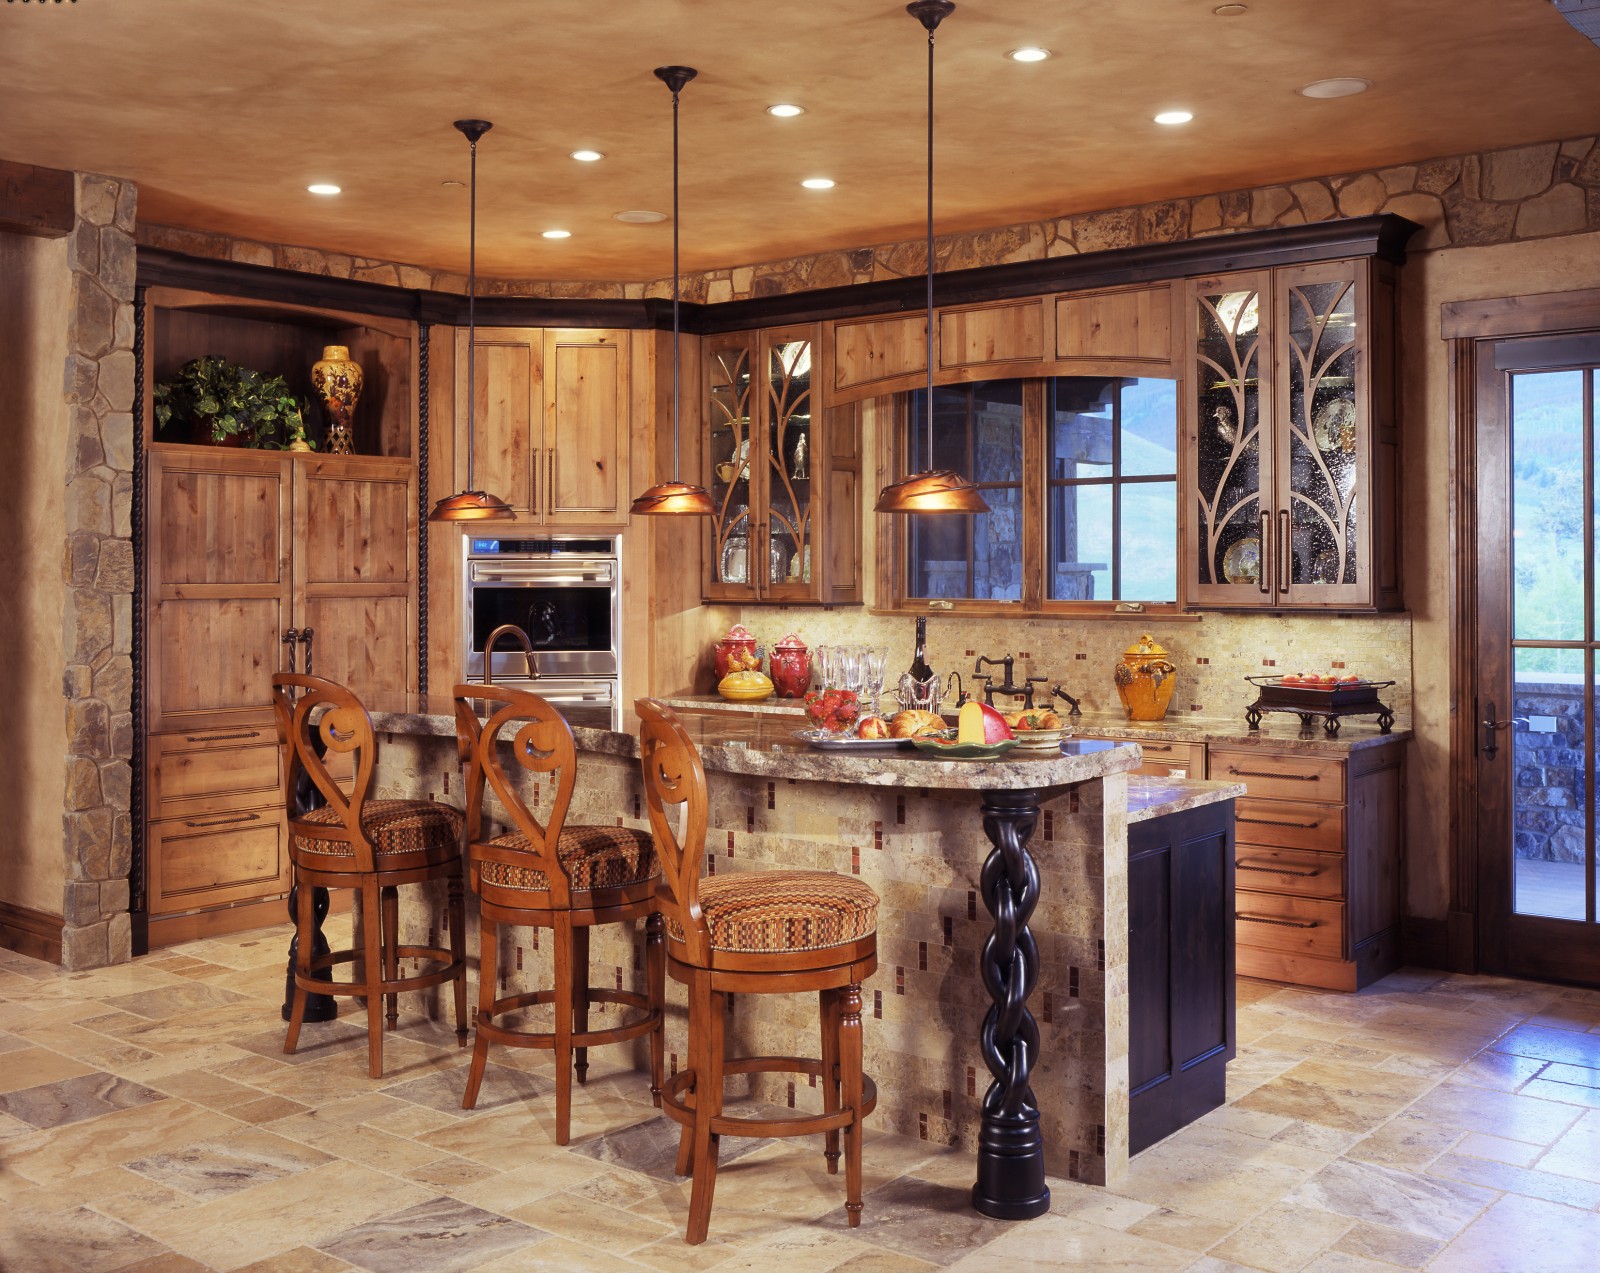 21 Amazing Rustic Kitchen Design Ideas